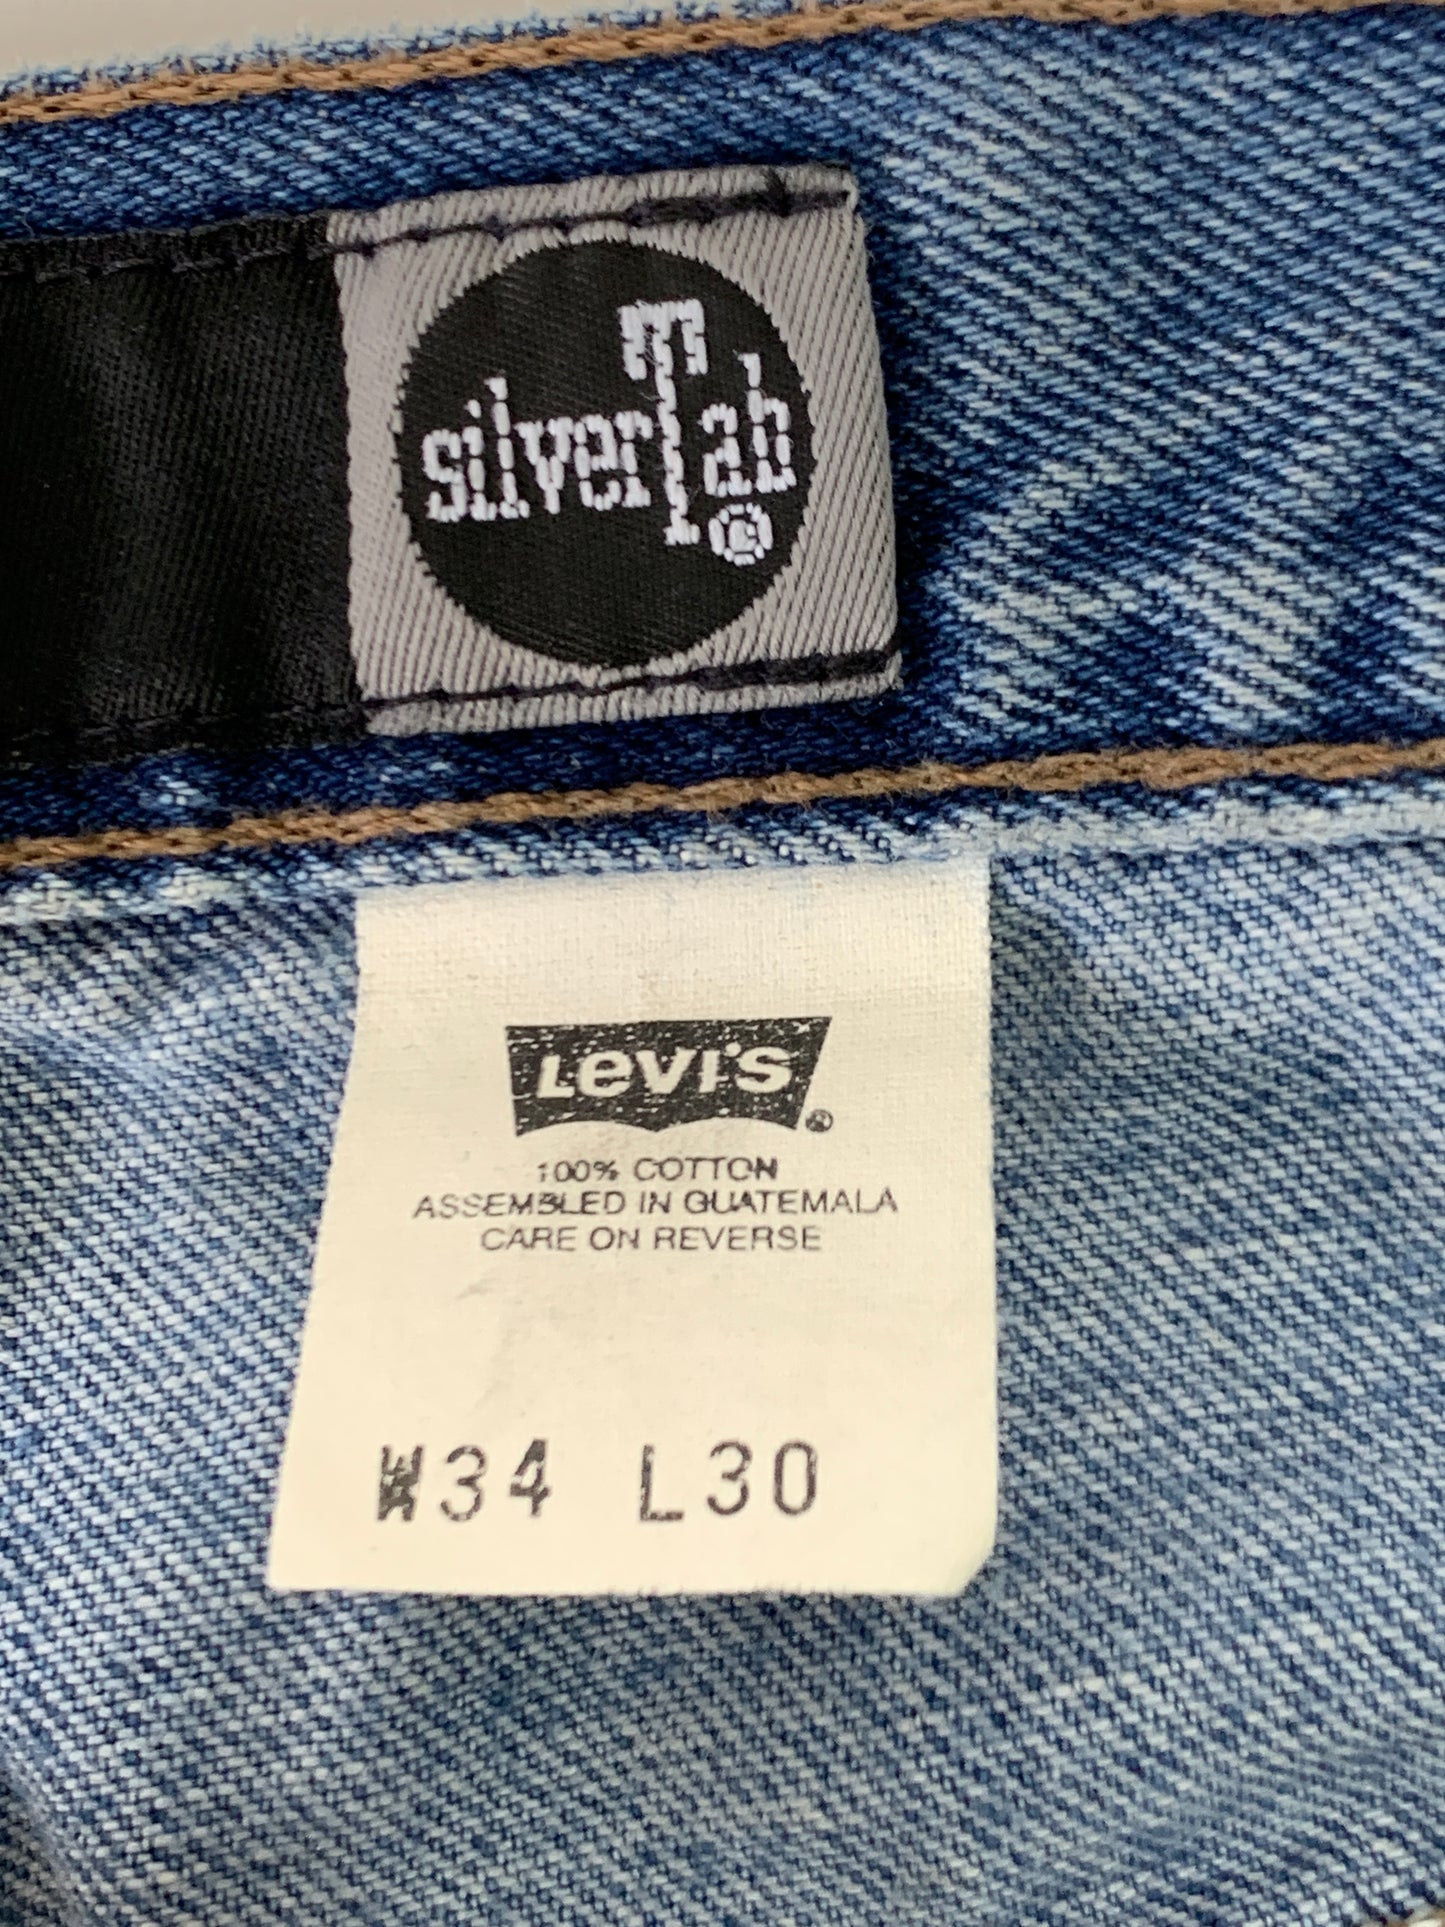 Levis Silvertab Baggy Vintage Jeans - 34 x 30